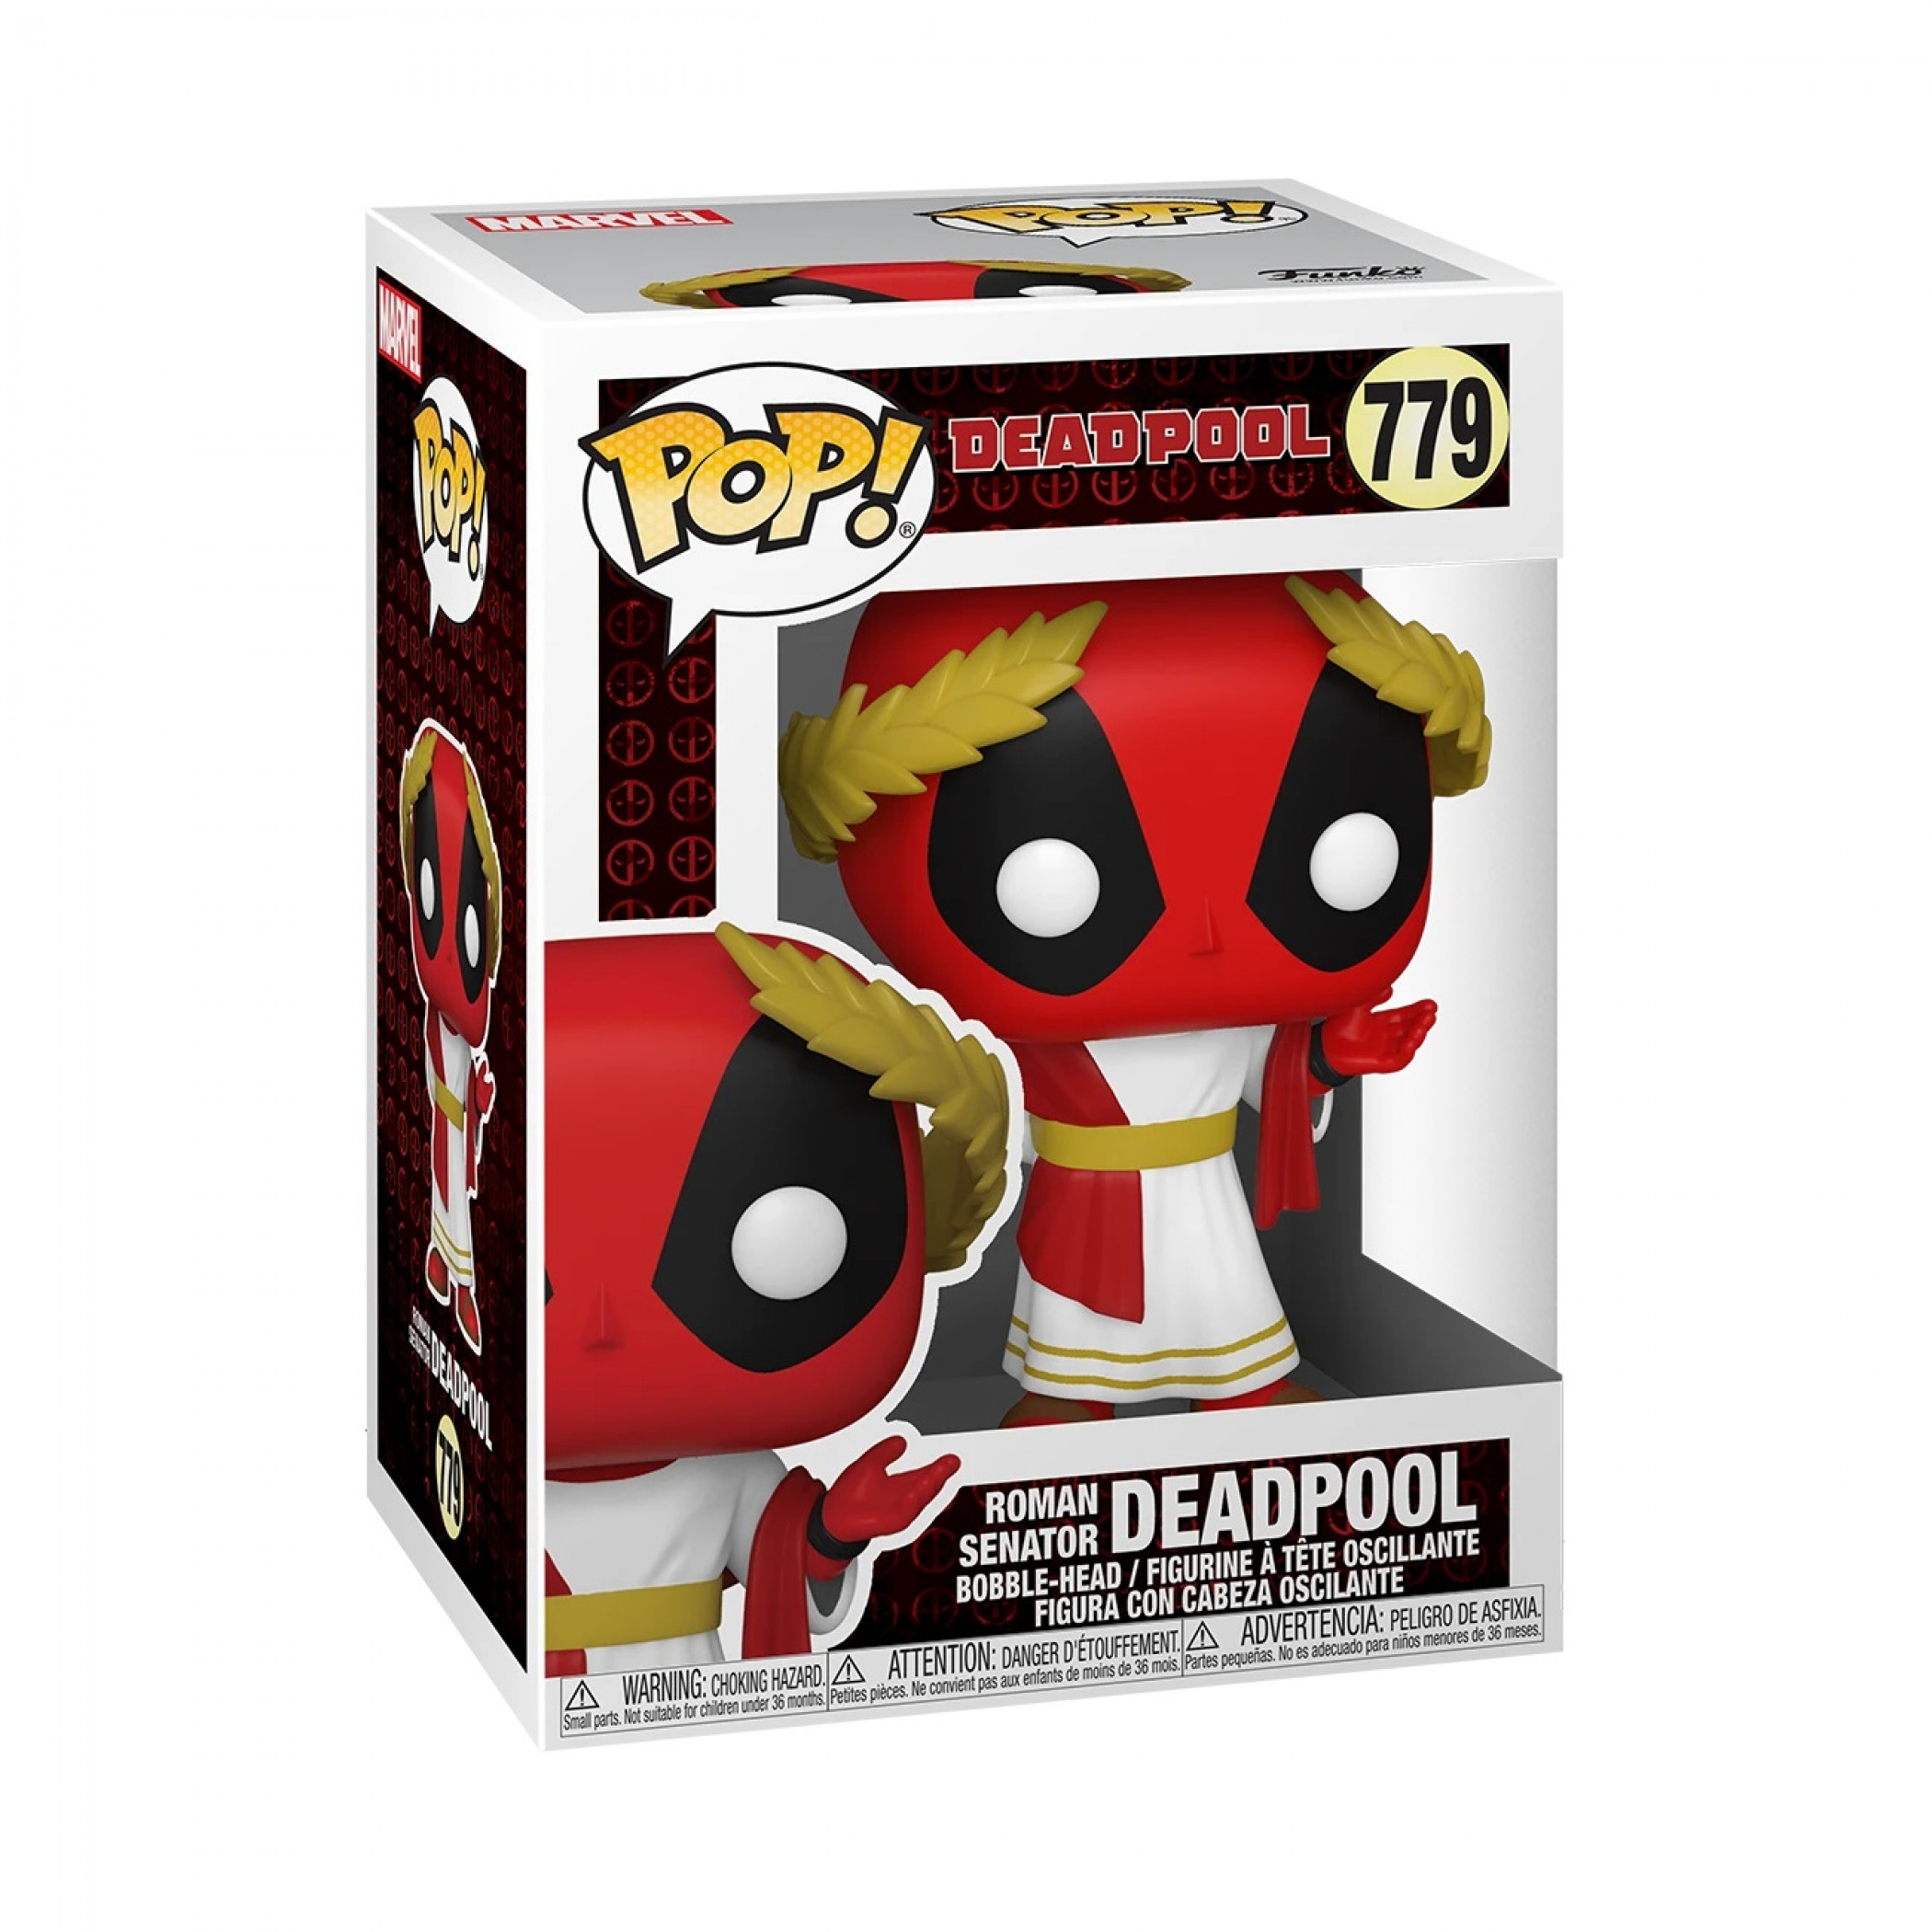 Deadpool 30th Anniversary Roman Senator Funko Pop! Vinyl Figure